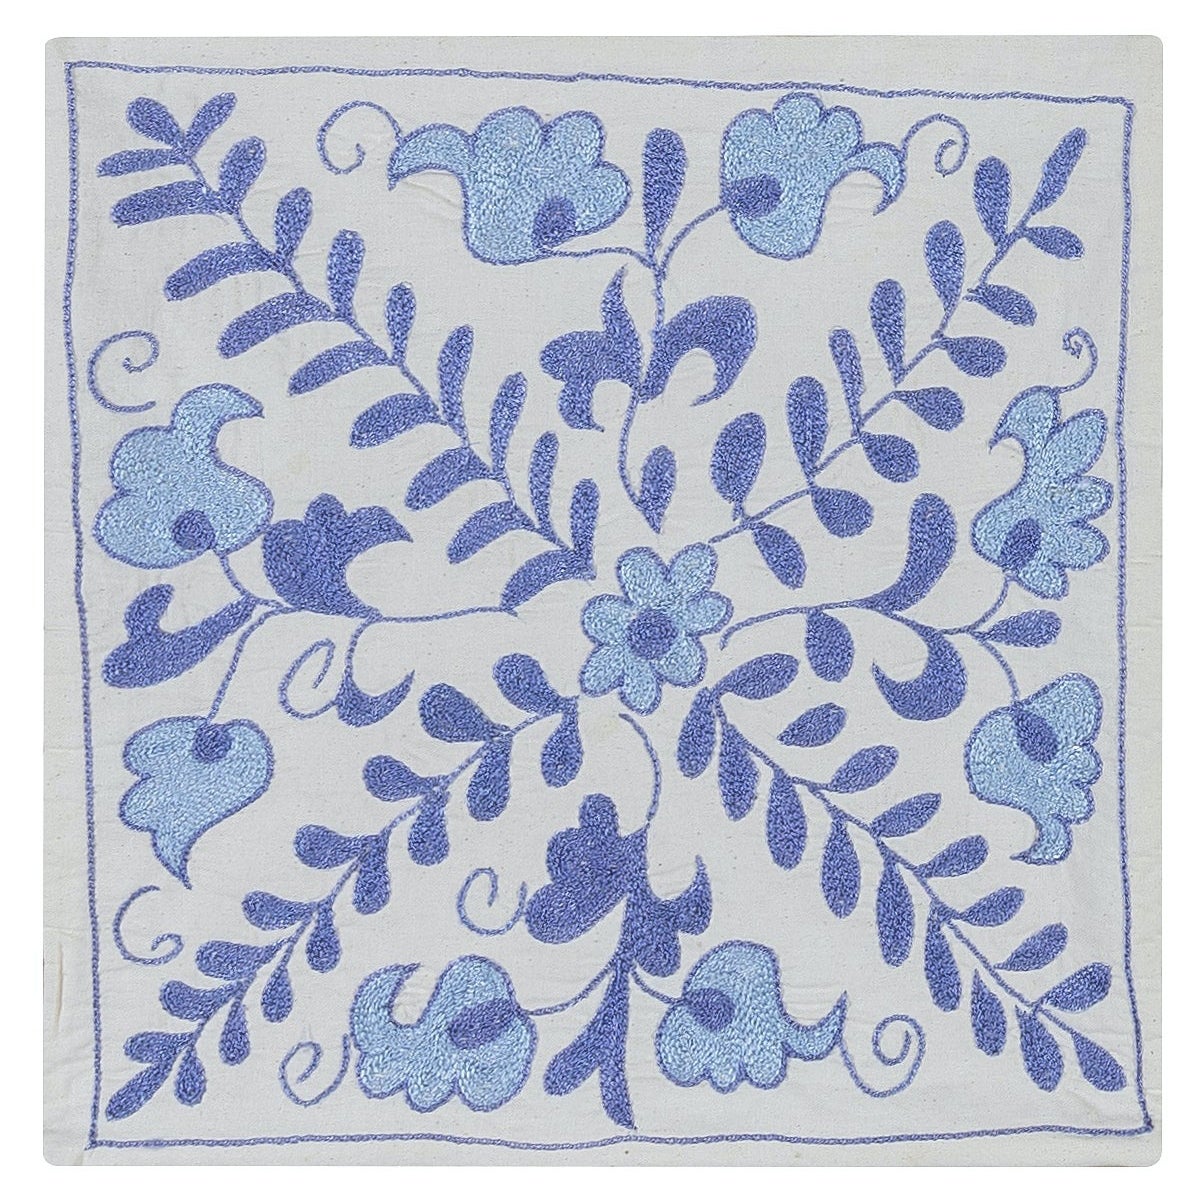 Modern Silk Embroidery Suzani Cushion Cover, New Uzbek Lace Pillowcase